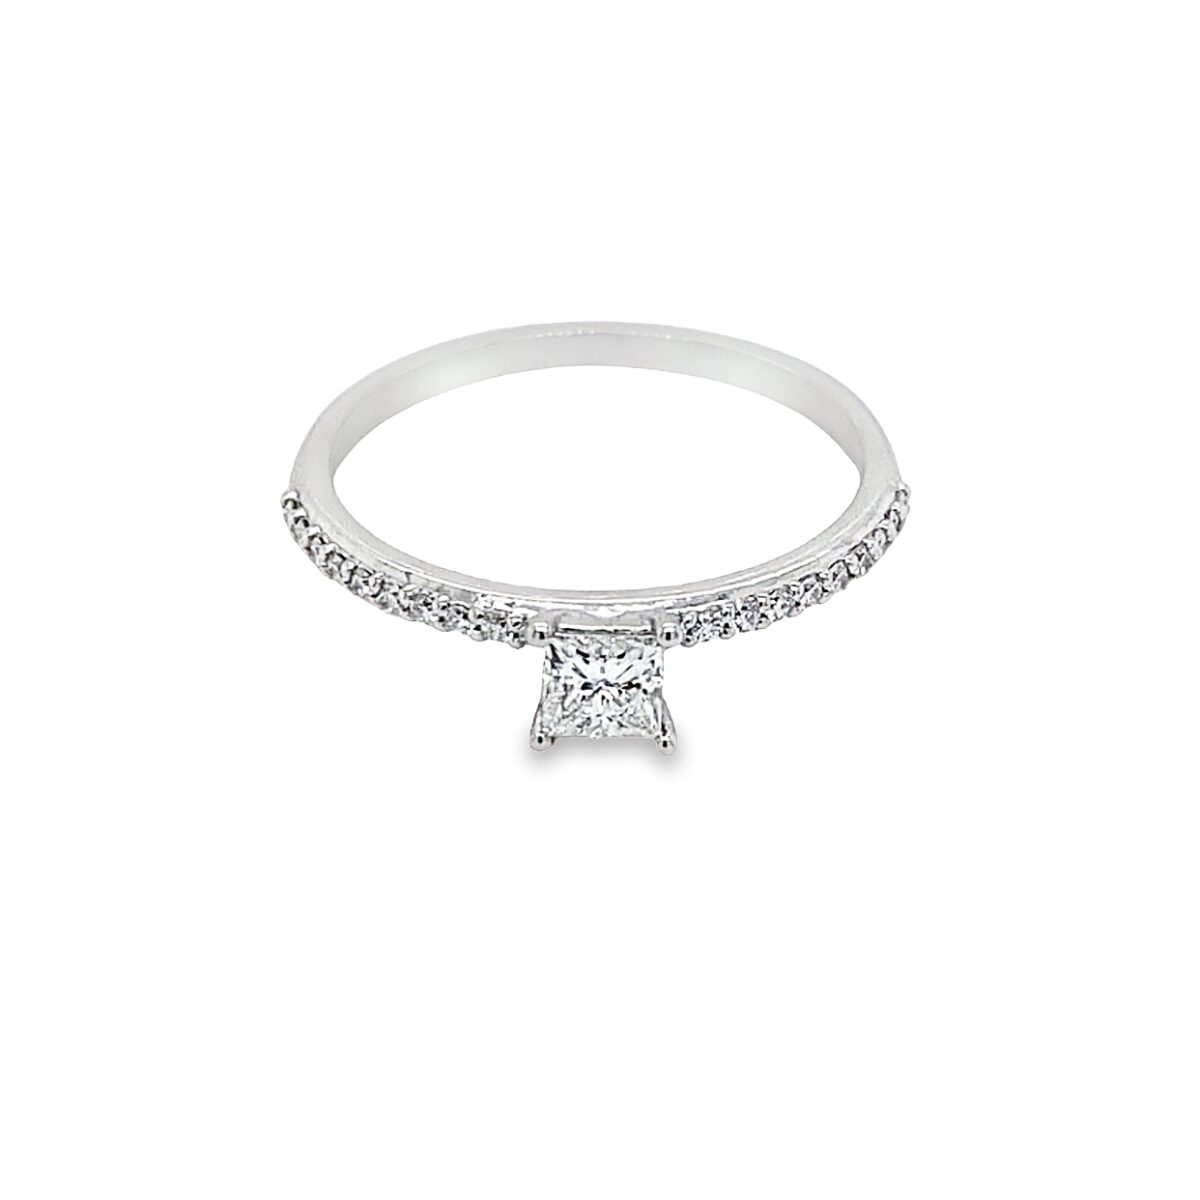 Jewellers - Μονόπετρο δακτυλίδι με Princess cut μπριγιάν